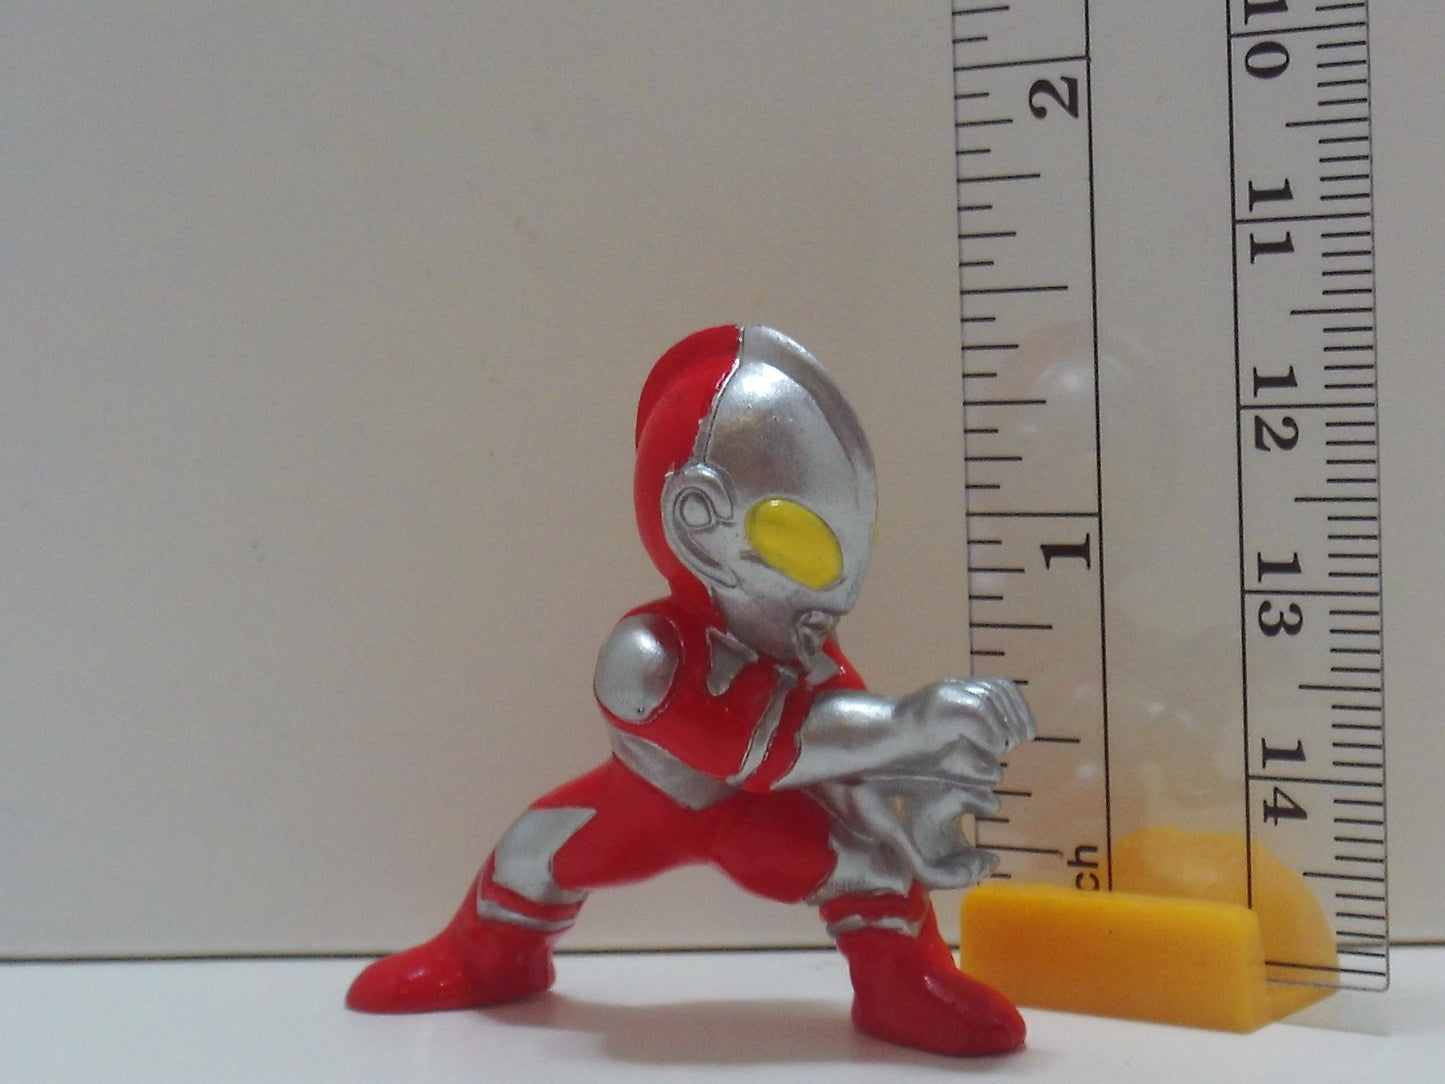 Ultraman Super Fighter Painted figure